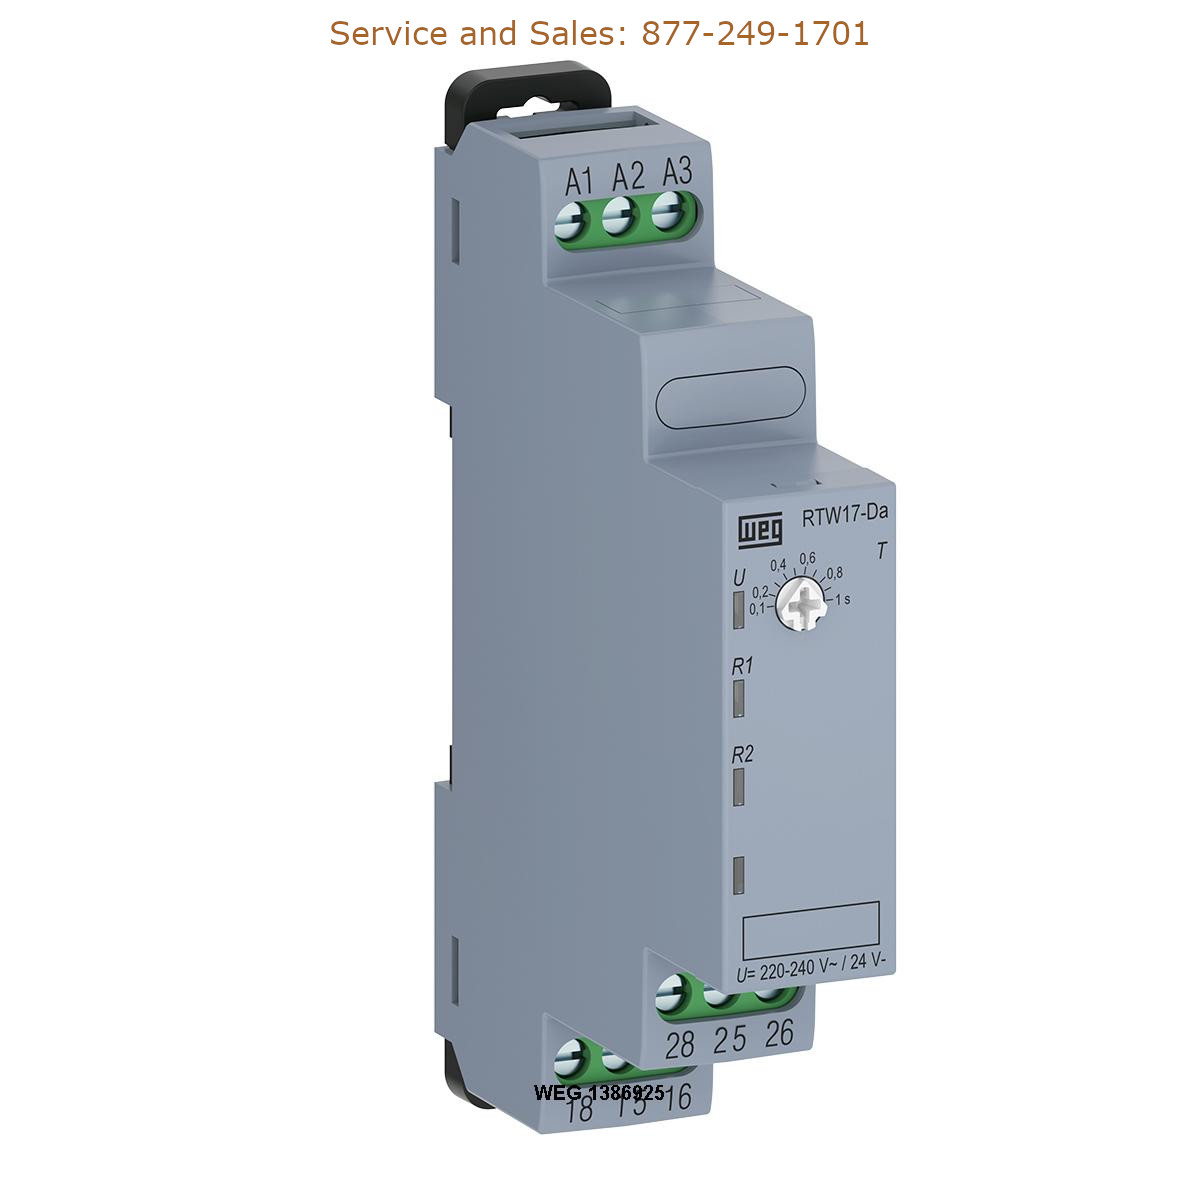 WEG 1386925 WEG Model Number 1386925 WEG Controls, Electronic Relays Repair Service, Troubleshooting, Replacement Parts https://gesrepair.com/wp-content/uploads/2022/WEG/WEG_1386925_Controls_Electronic_Relays.jpg